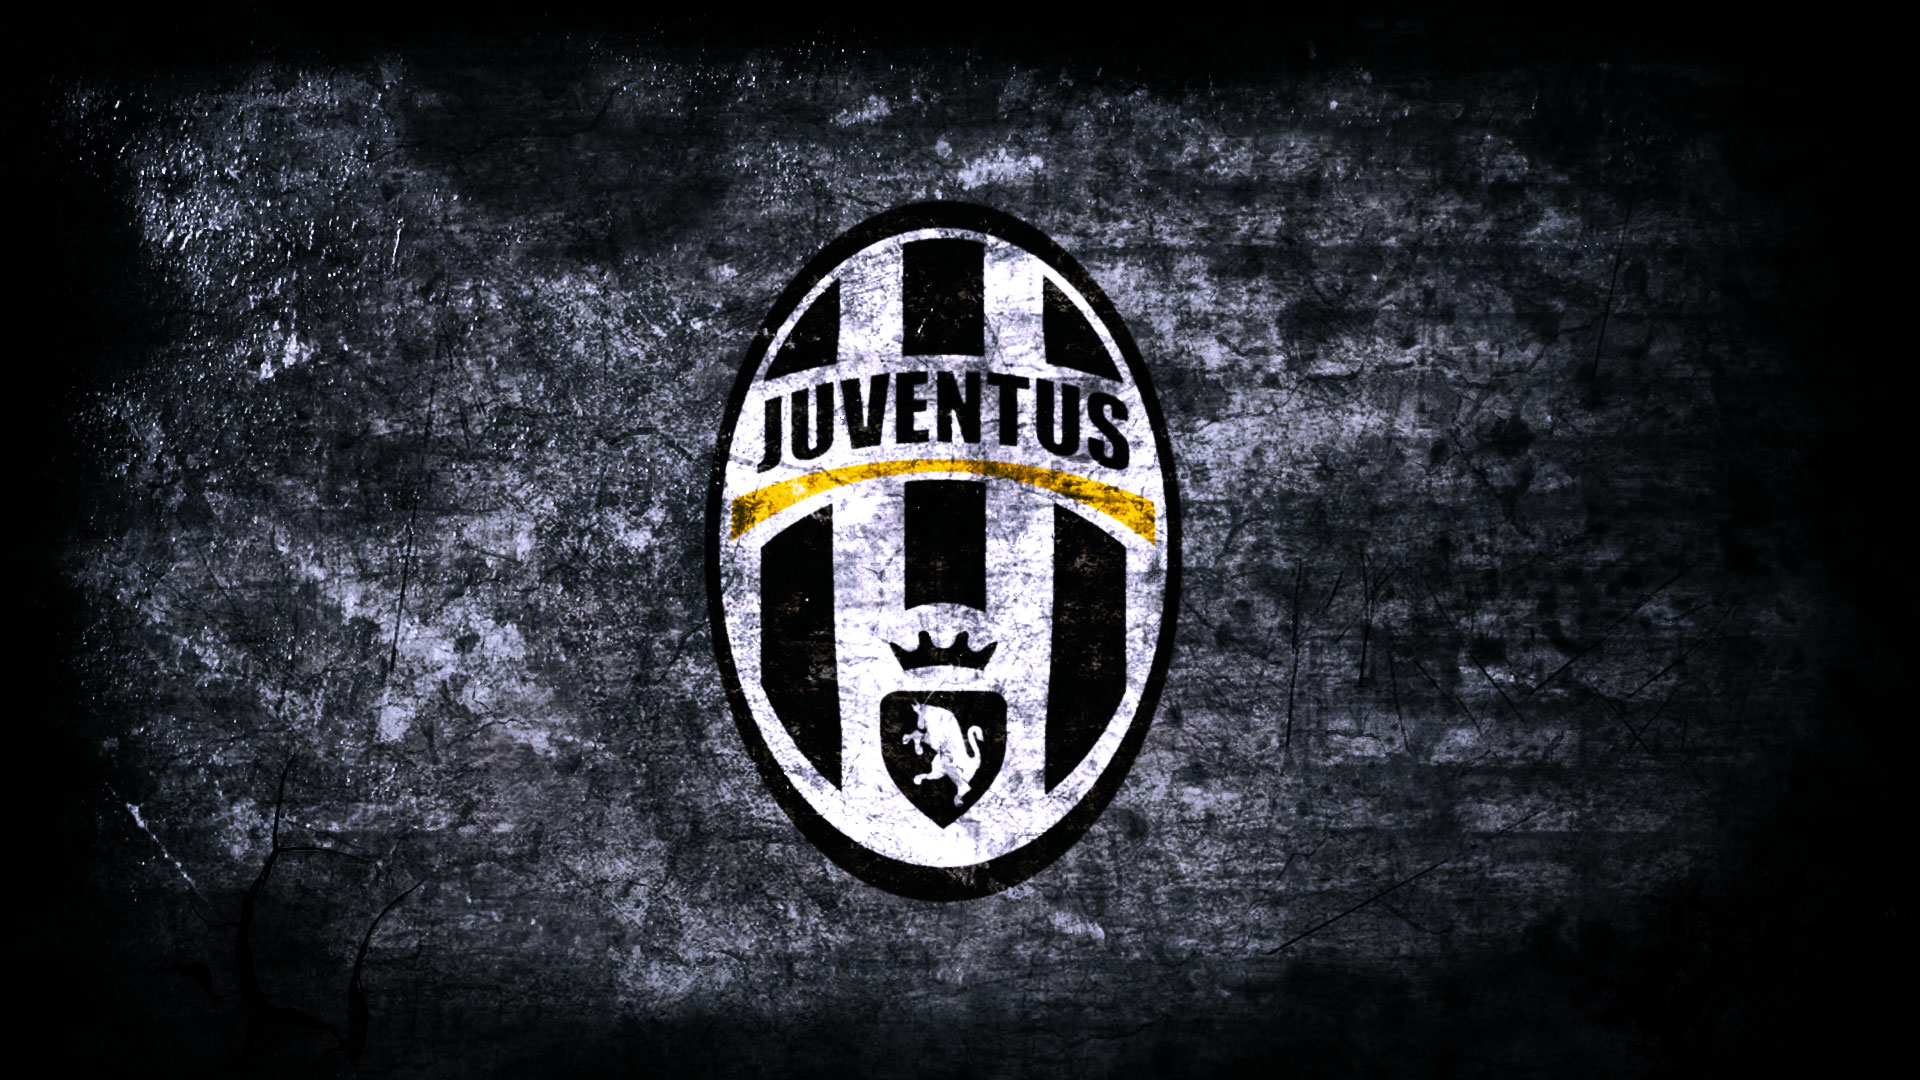 Juventus Wallpaper For Galaxy S4